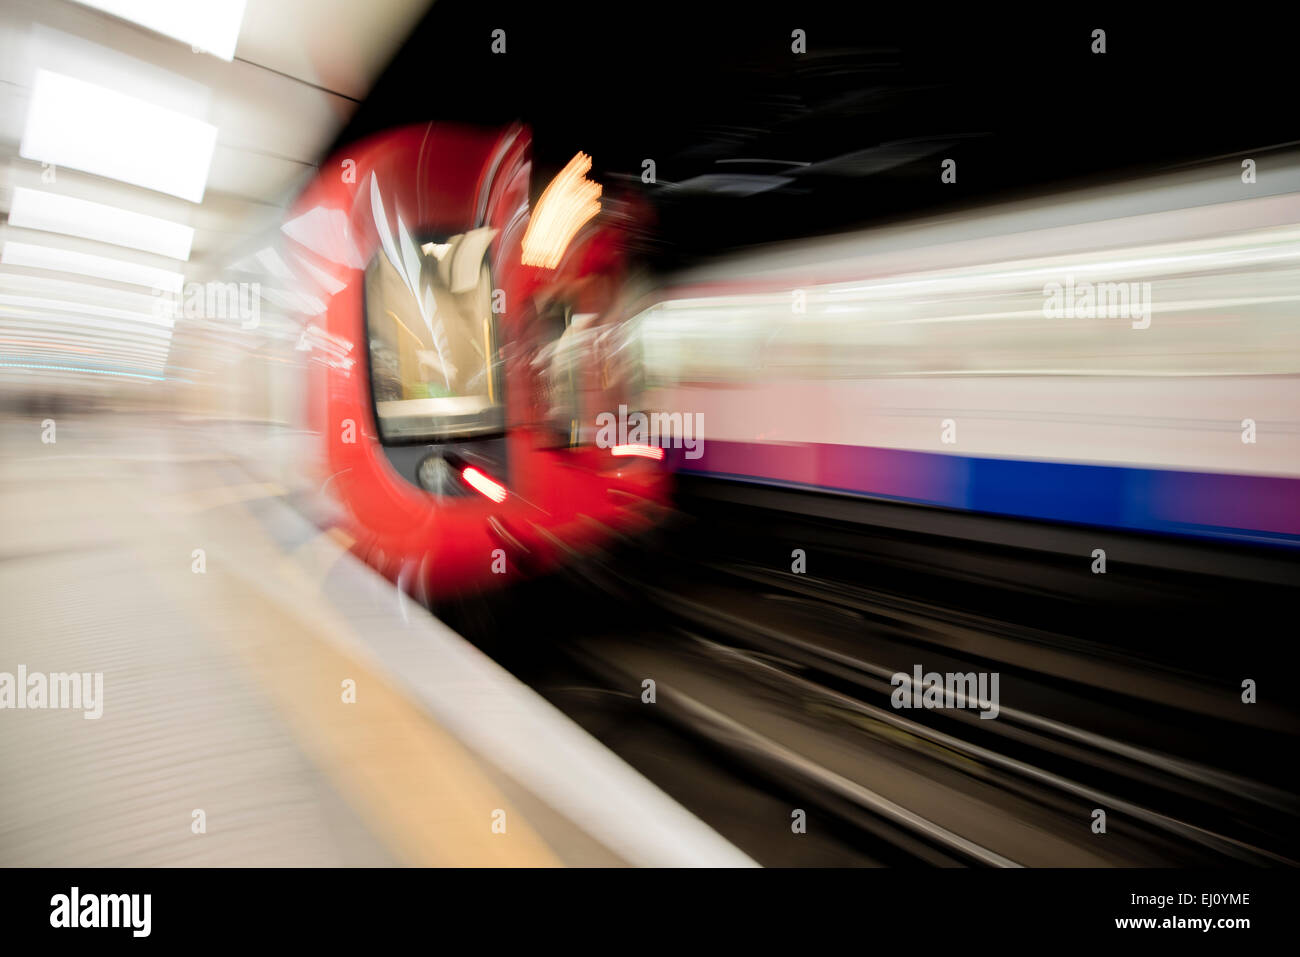 Tube train in motion Stock Photo